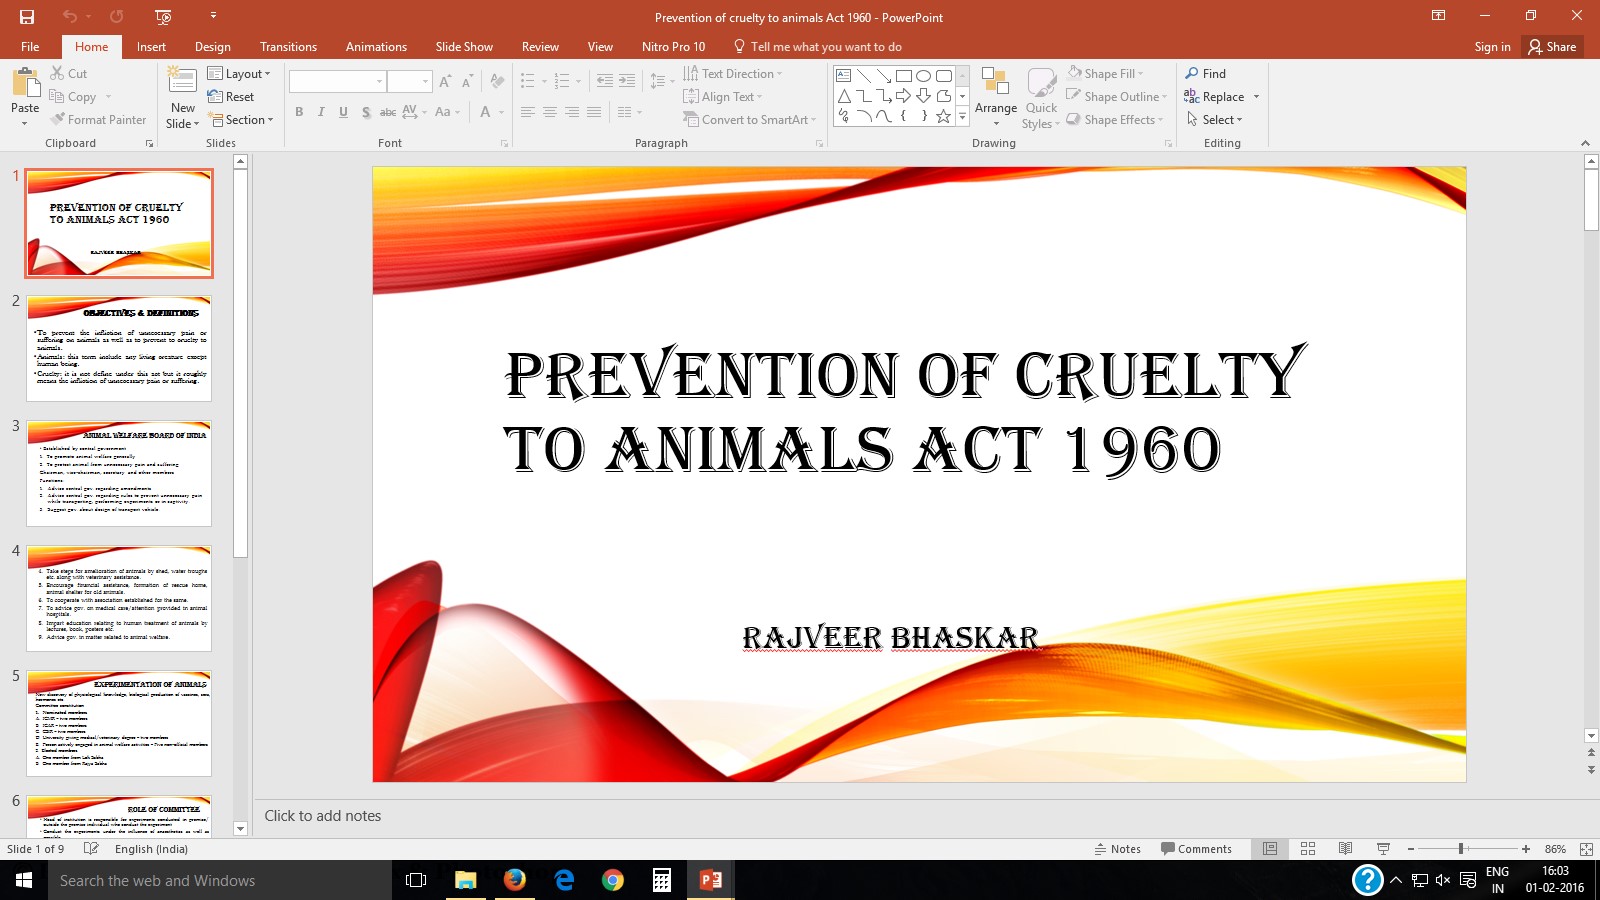 Monika & Rajveer Bhaskar@RCPIPER: The Prevention of Cruelty to Animals Act  1960